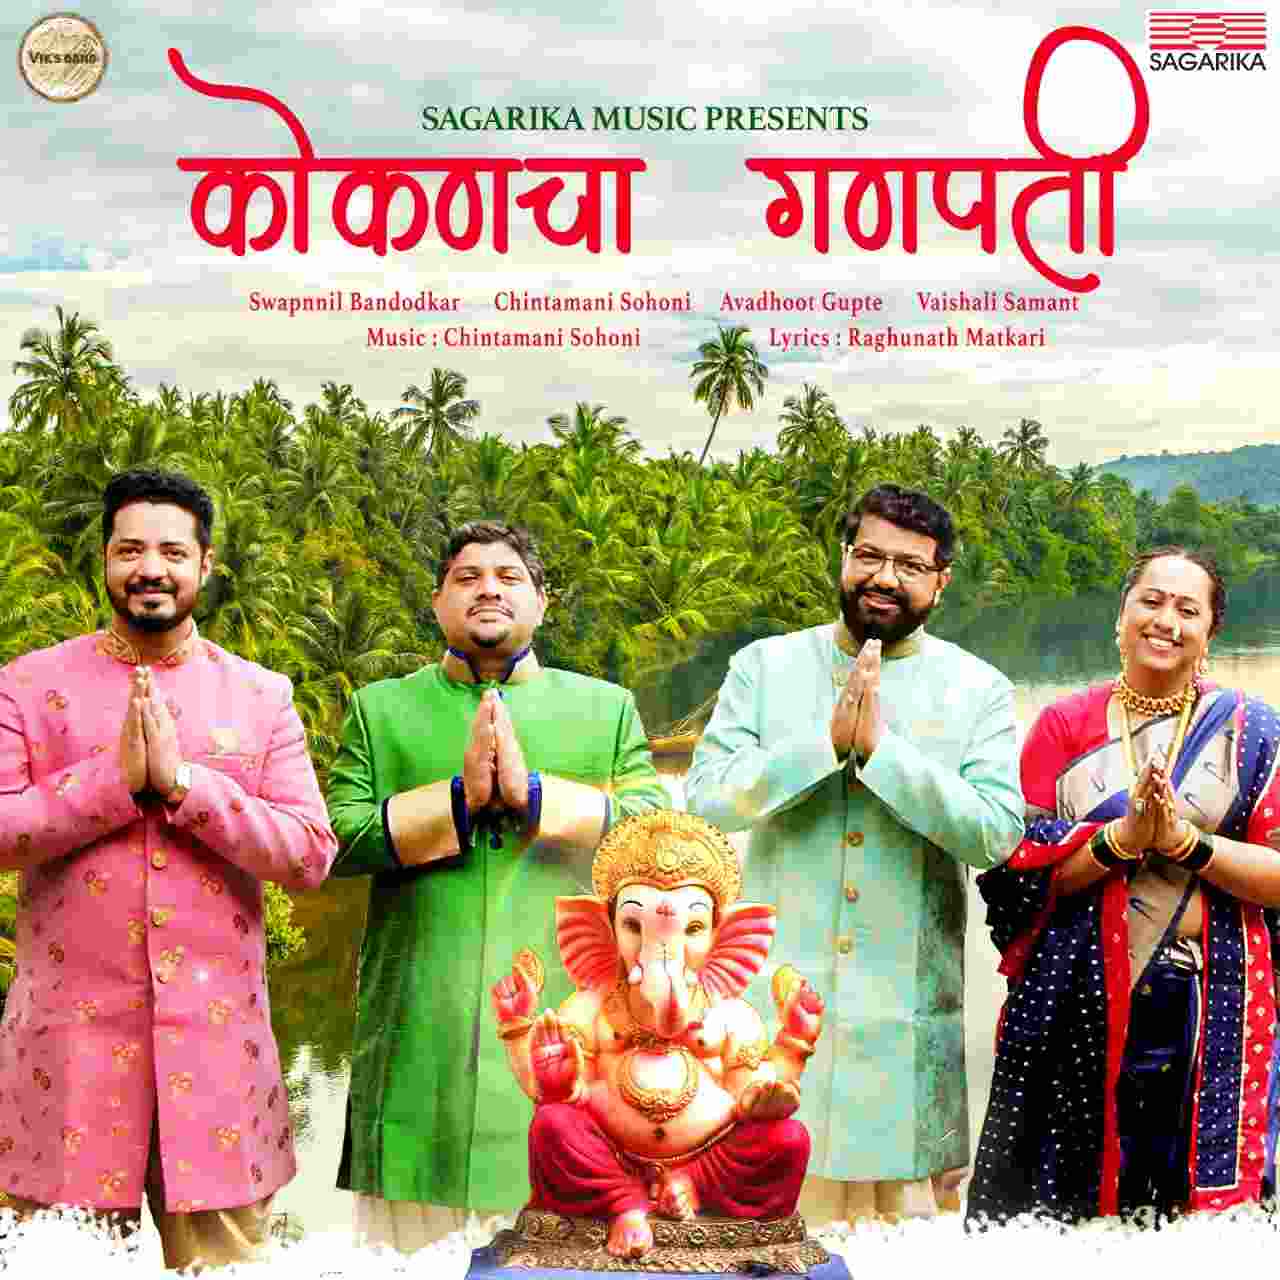 Sagarika Music's Marathi Music Video Kokancha Ganpati Releasing on 7th September